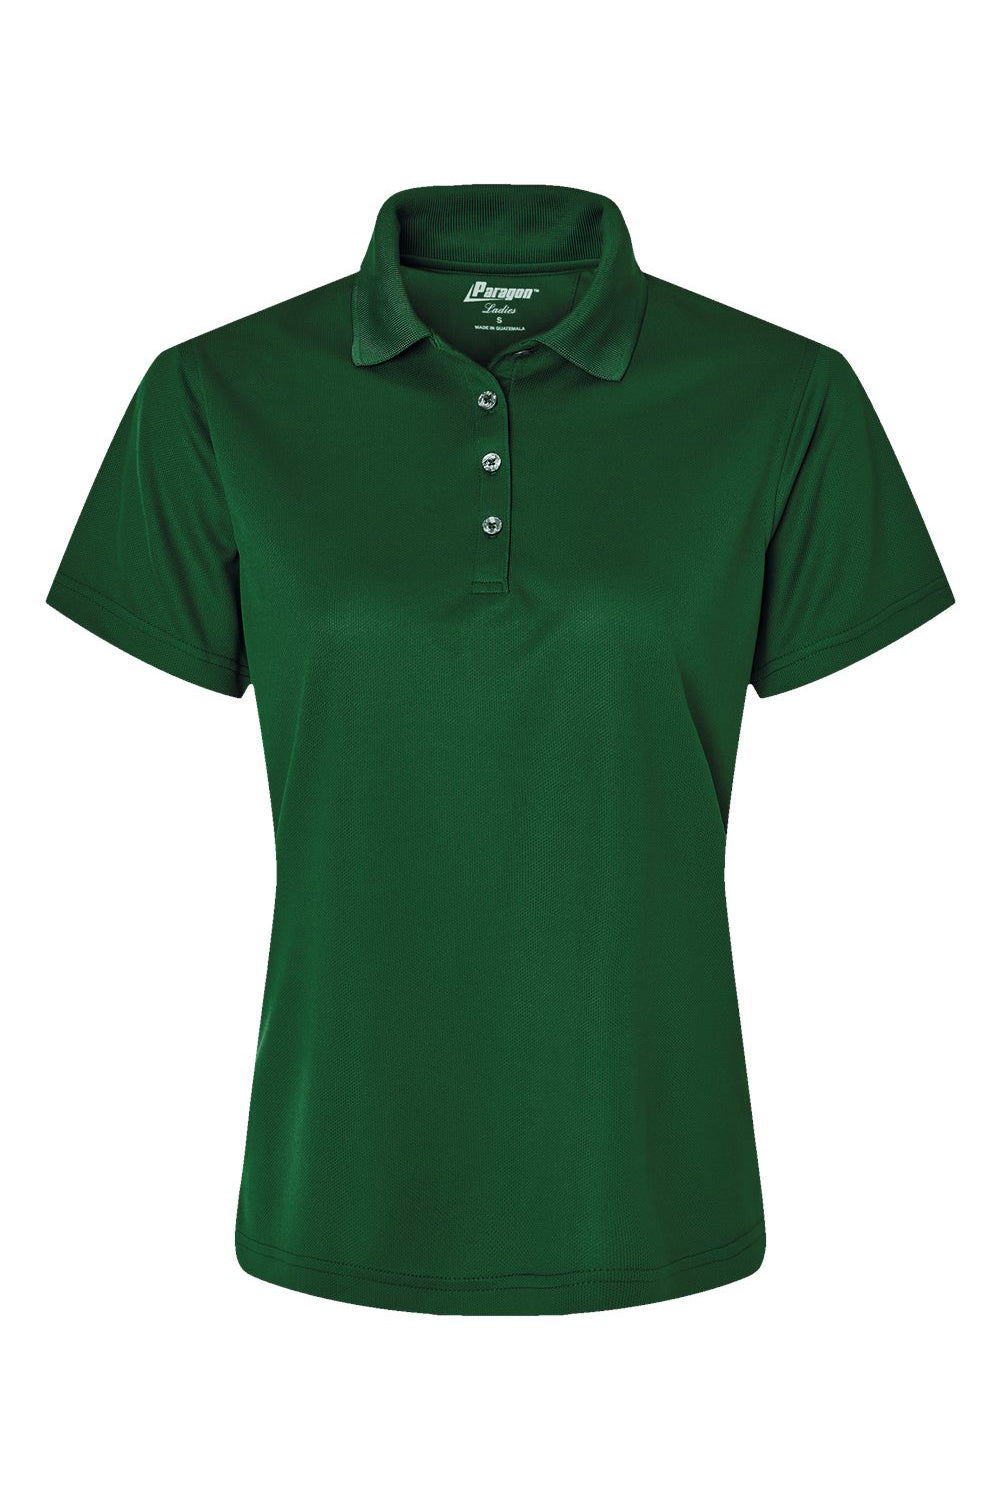 Paragon 104 Womens Saratoga Performance Mini Mesh Short Sleeve Polo Shirt Hunter Green Flat Front